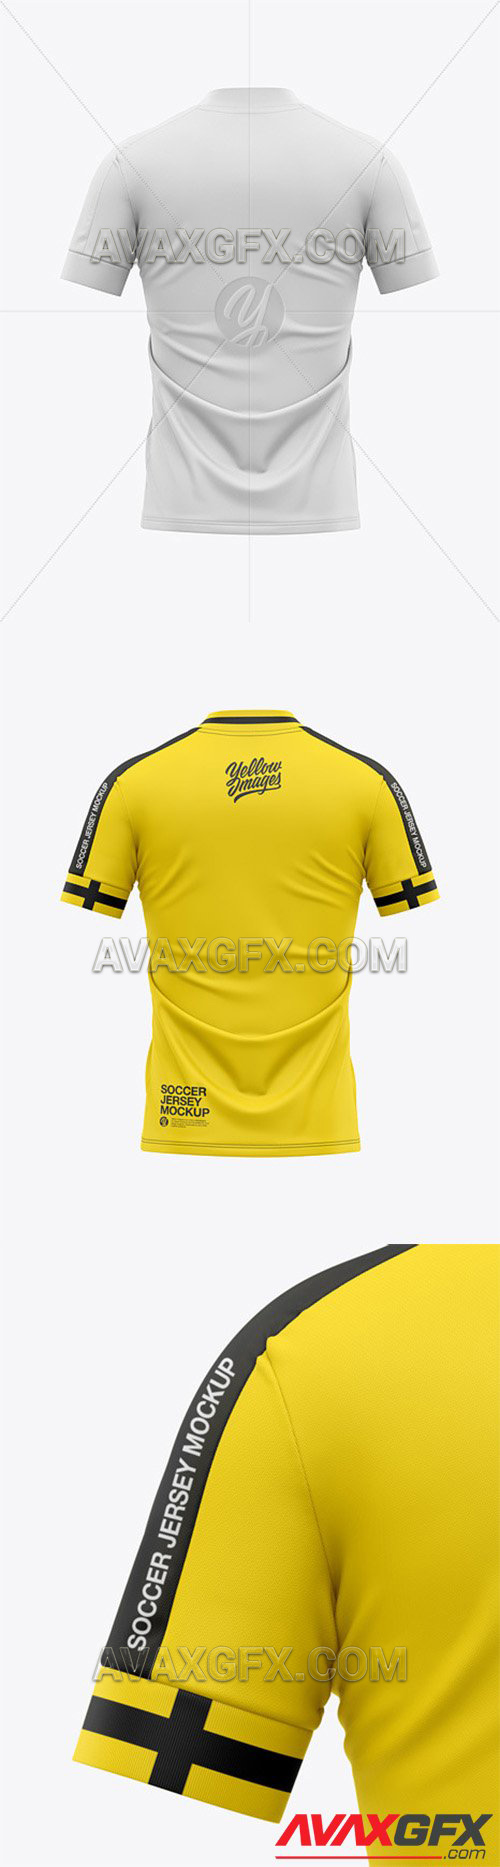 Men’s Soccer Jersey T-Shirt Mockup - Back View 60643